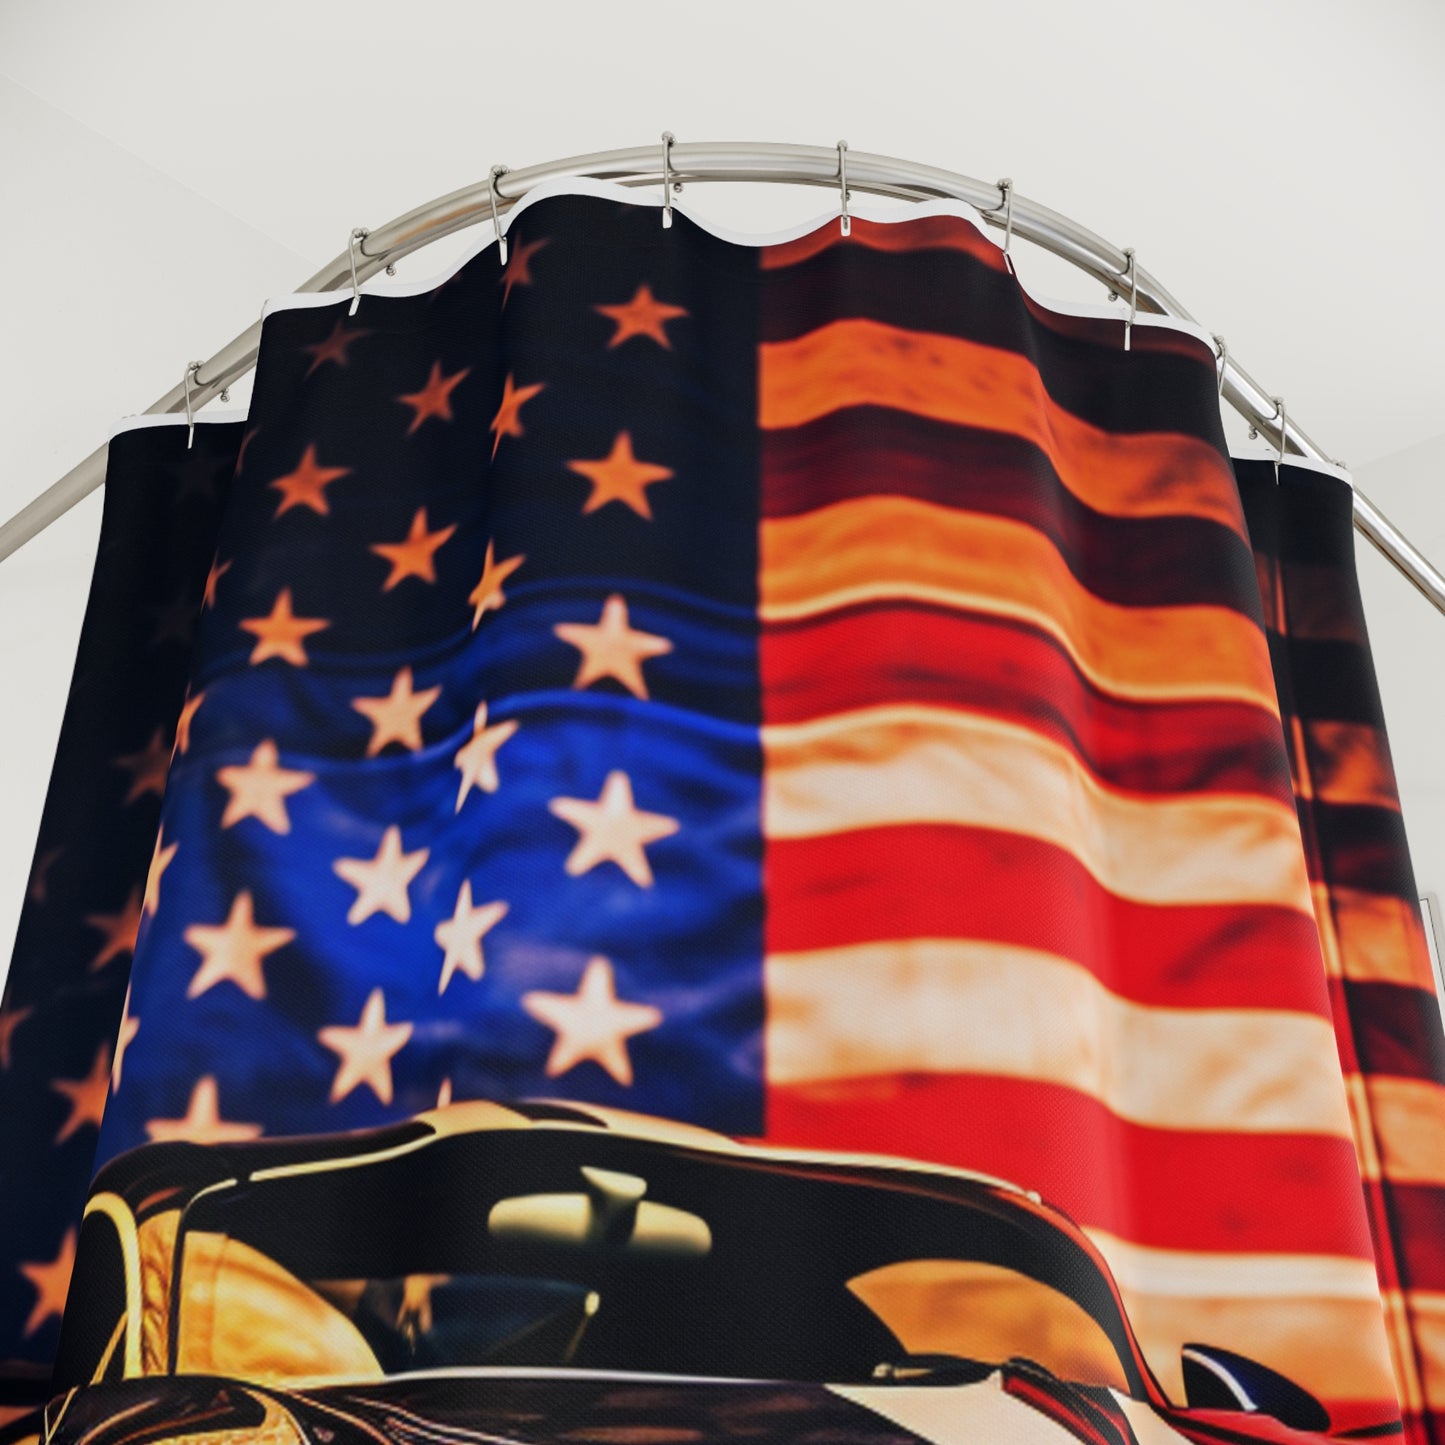 Polyester Shower Curtain Macro Bugatti American Flag 4